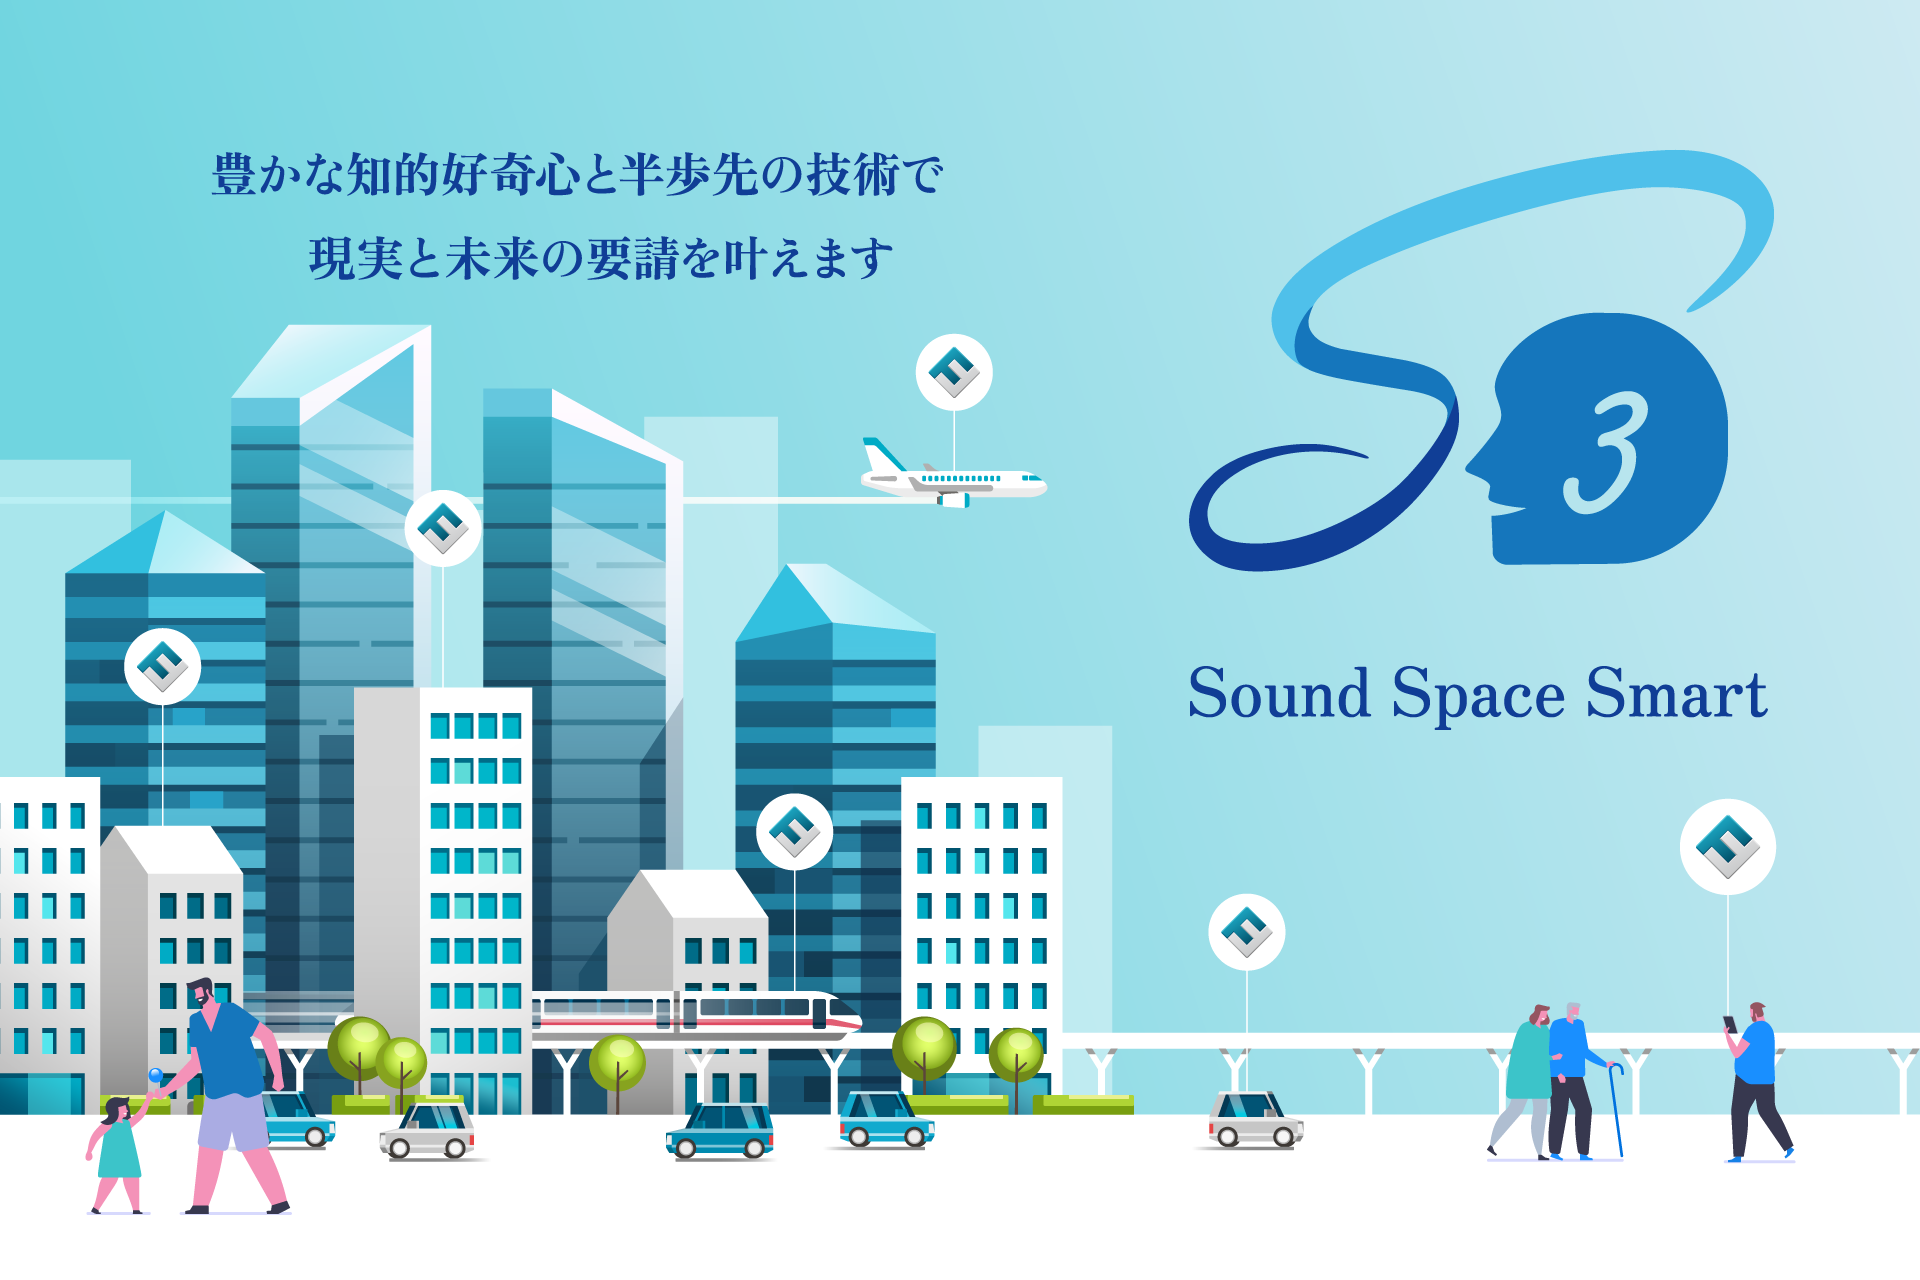 Sound Space Smart